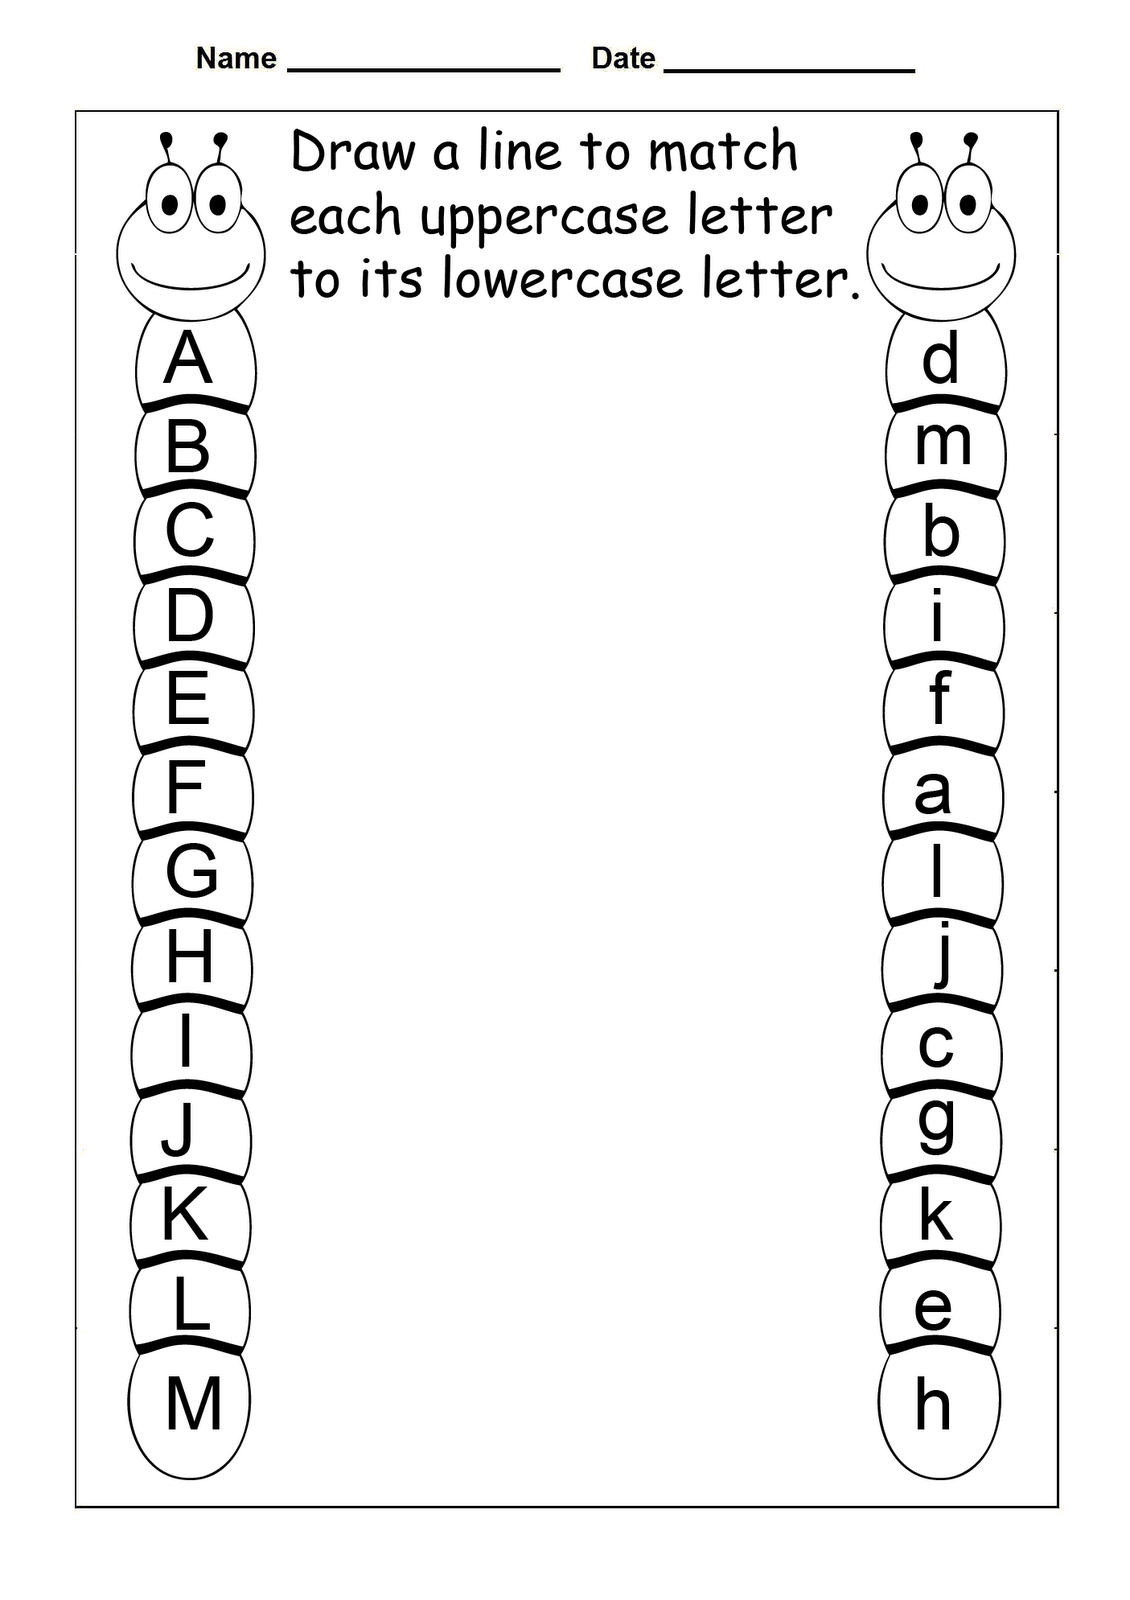 prek-english-worksheet-match-starting-alphabets-lowercase-alphabet